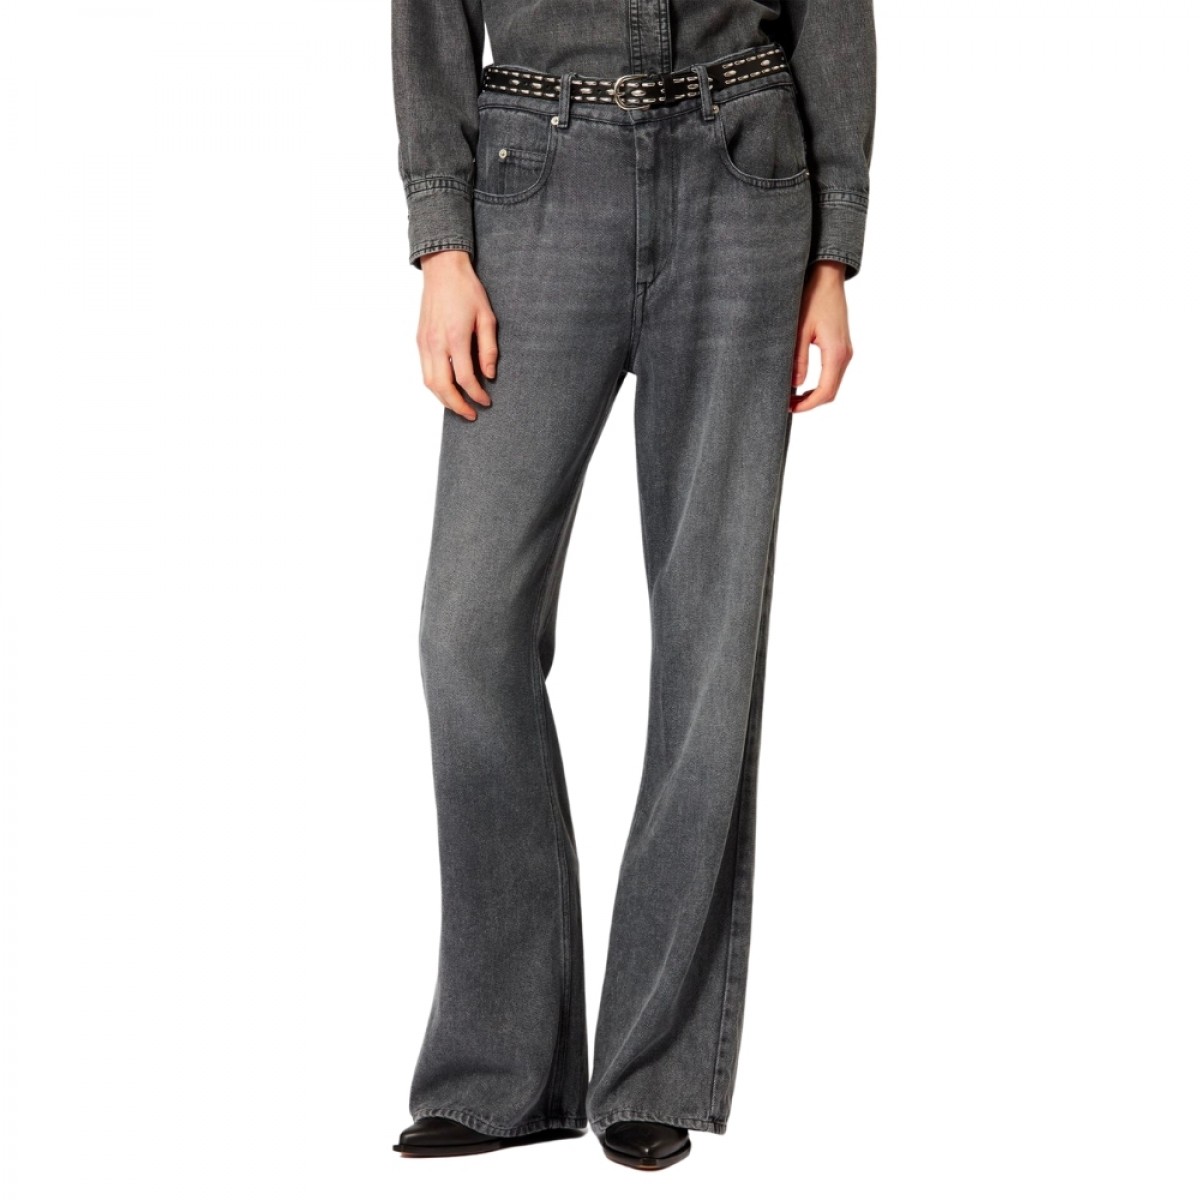 belvira jeans - grey - jeans front